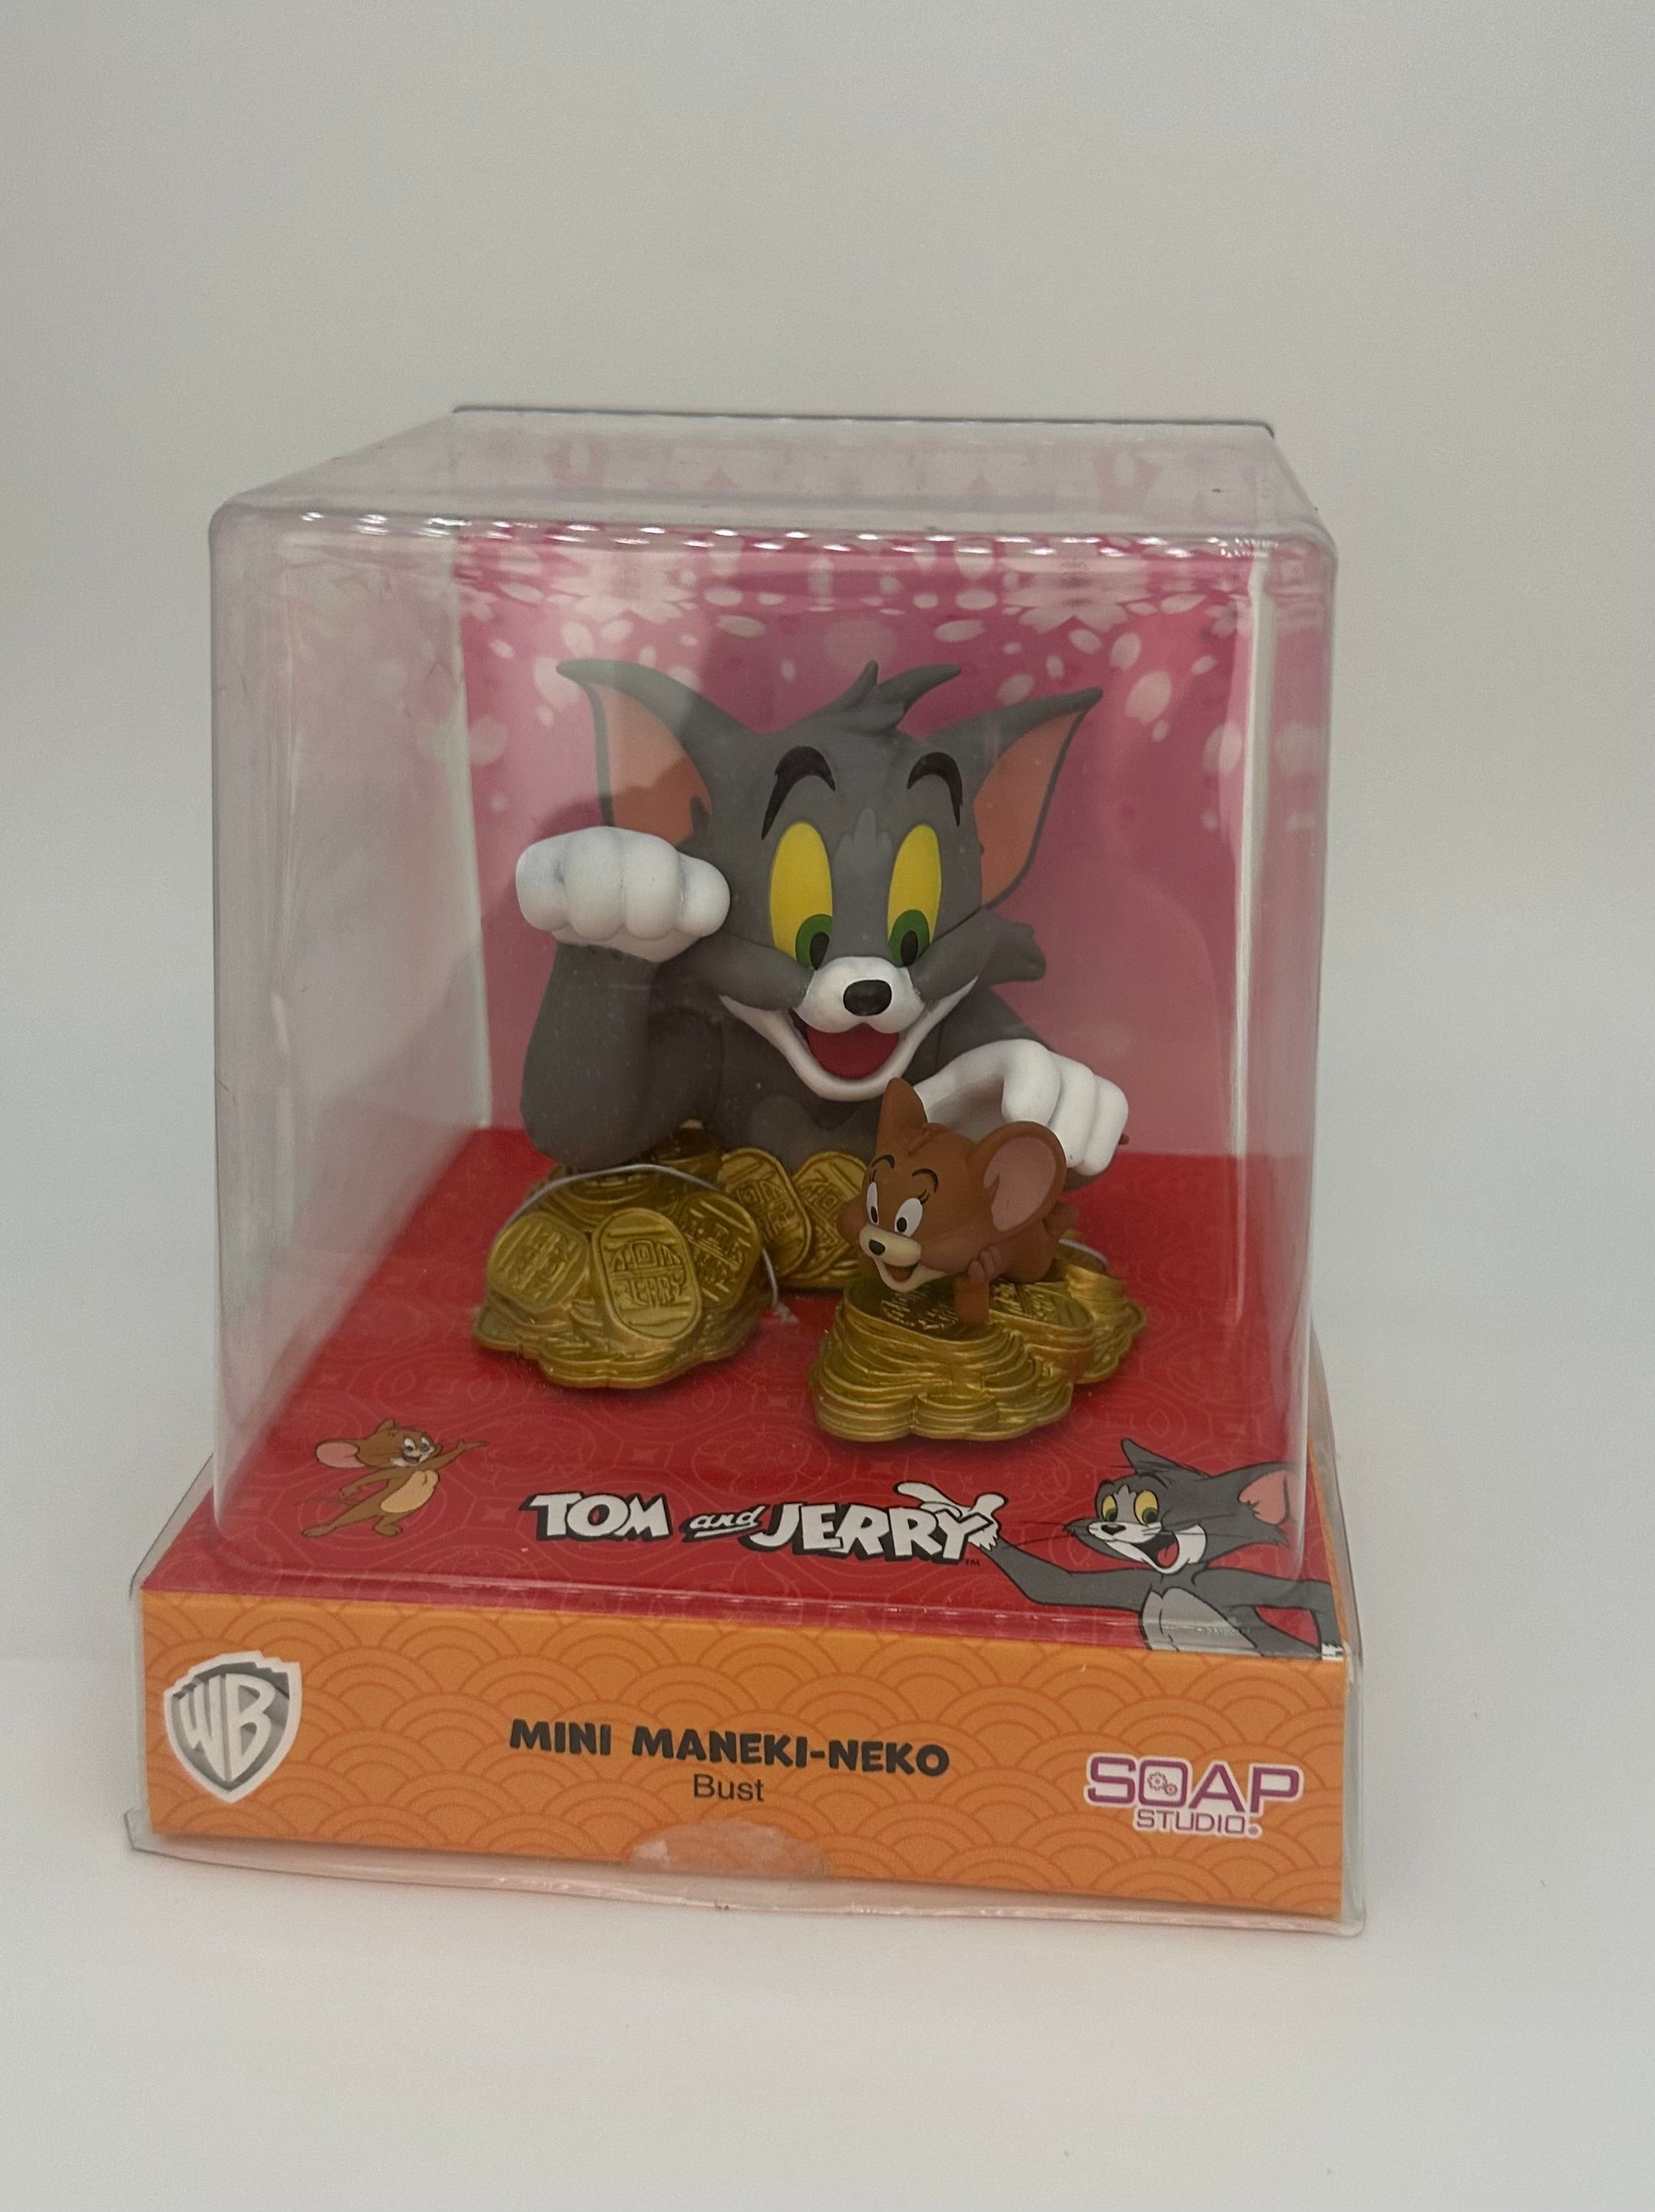 Soap Studio Tom and Jerry Mini Maneki Neko Vinyl Bust Figurine New with Box  - Walmart.com